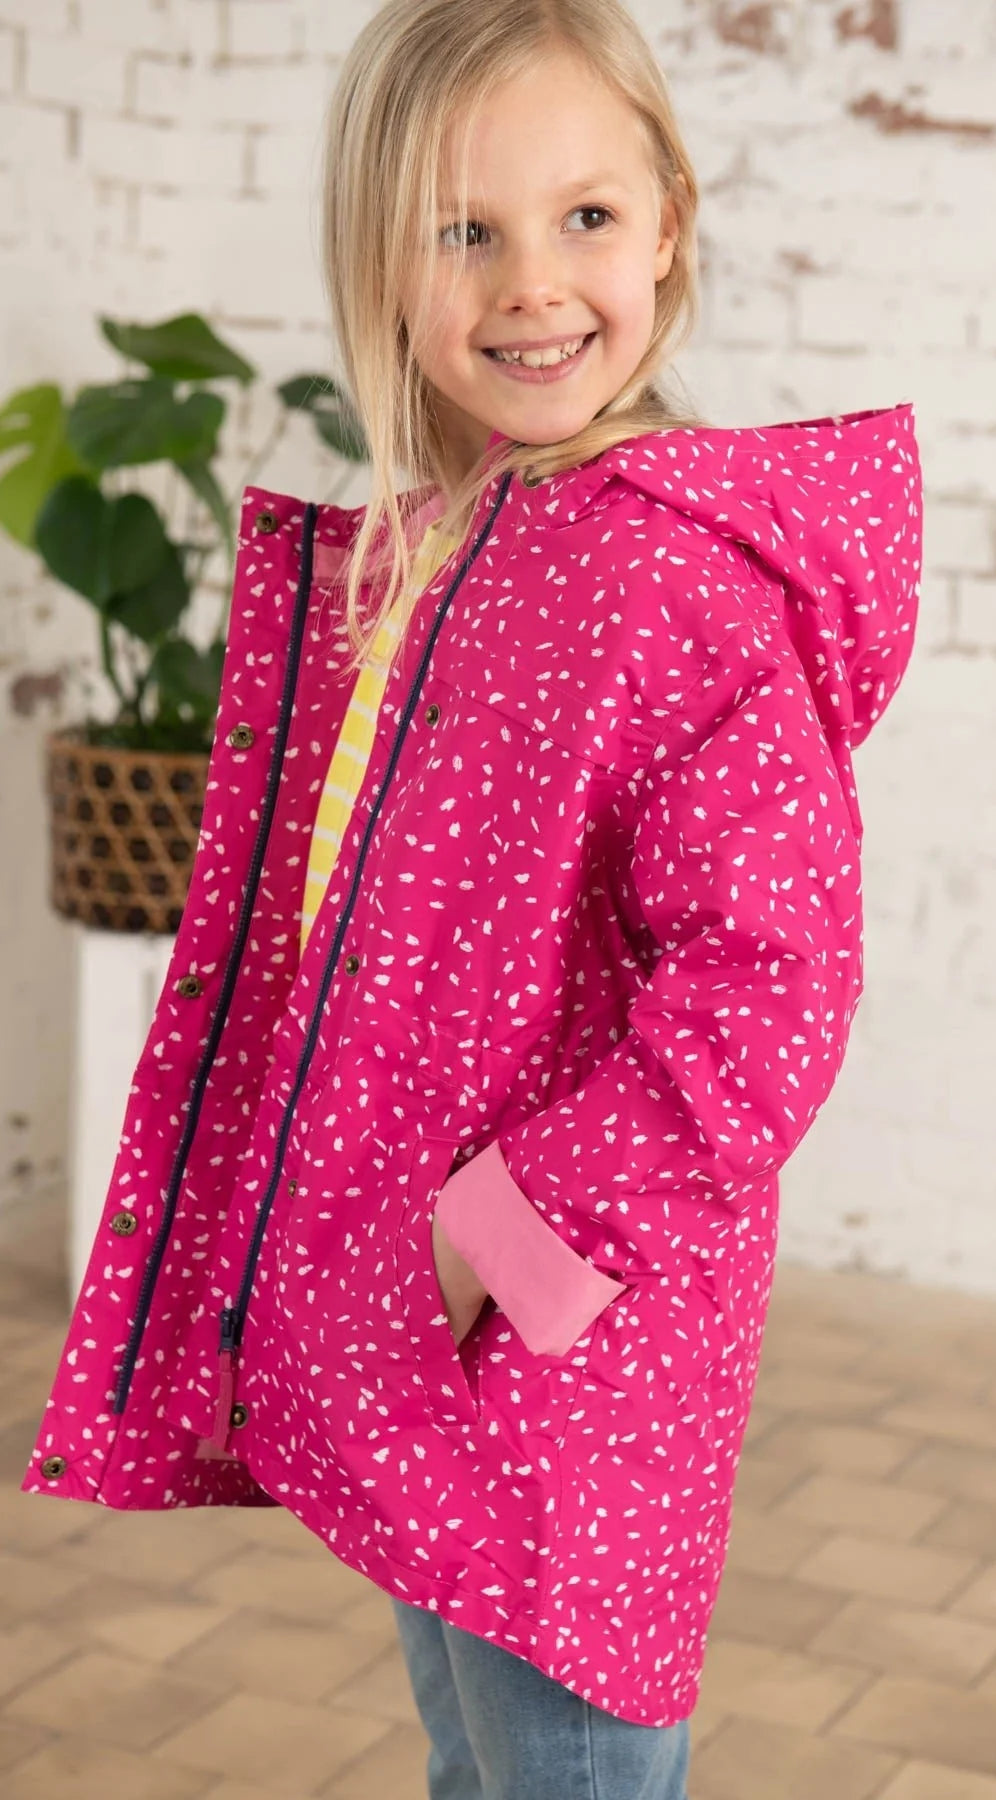 Lighthouse Kids 'Charlotte' Waterproof Jacket - Bright Pink Print